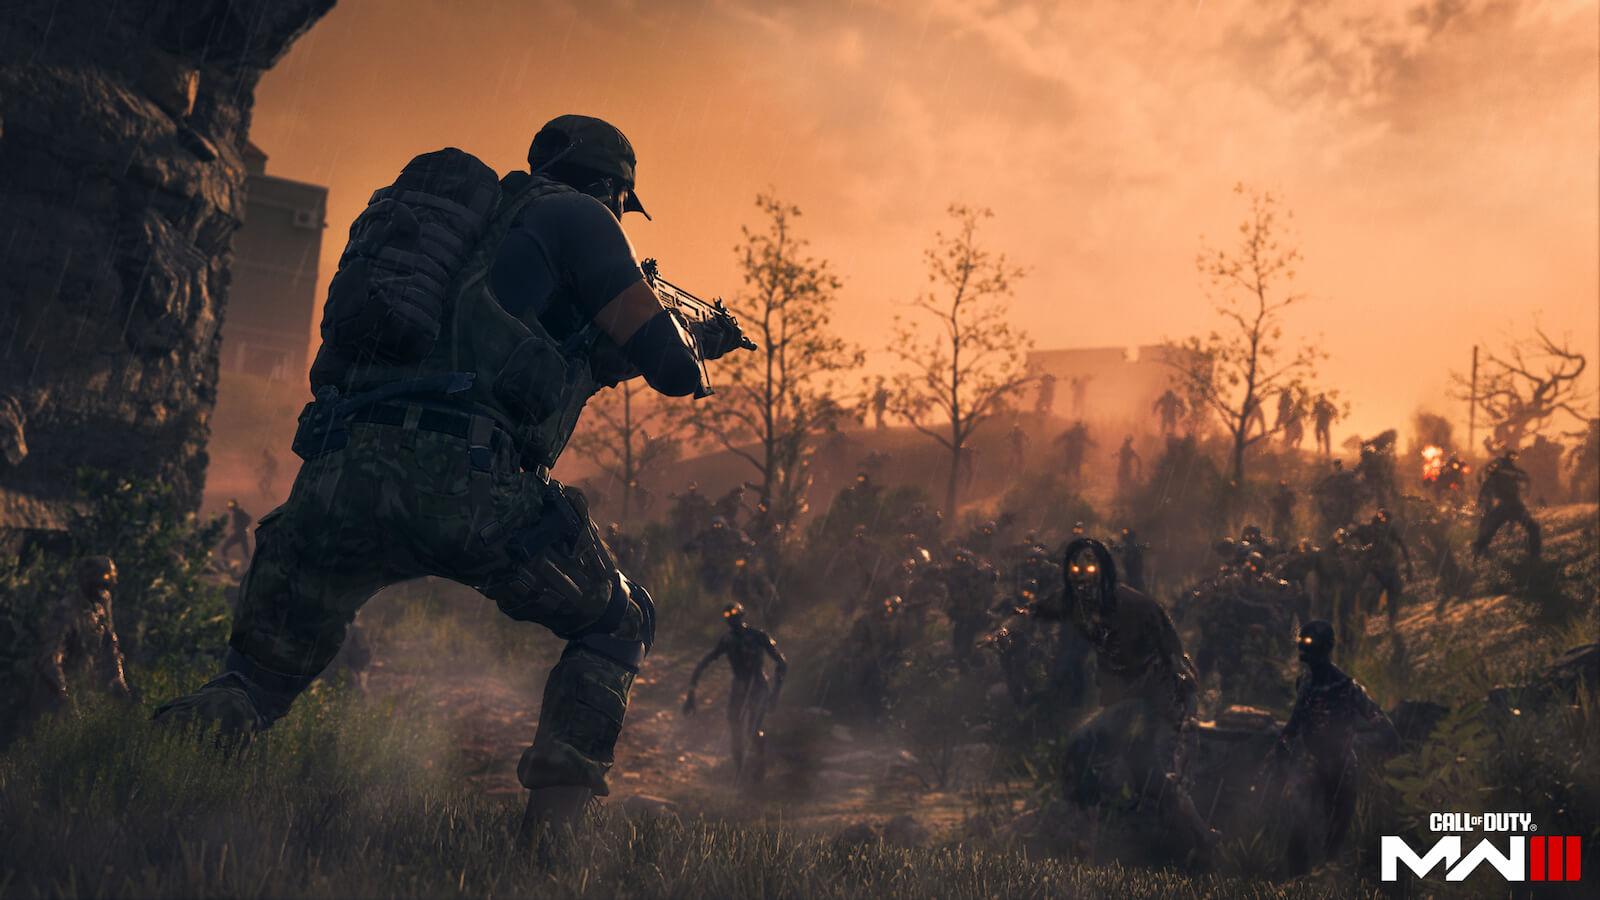 Call of Duty: Modern Warfare 3: How to unlock guns faster by